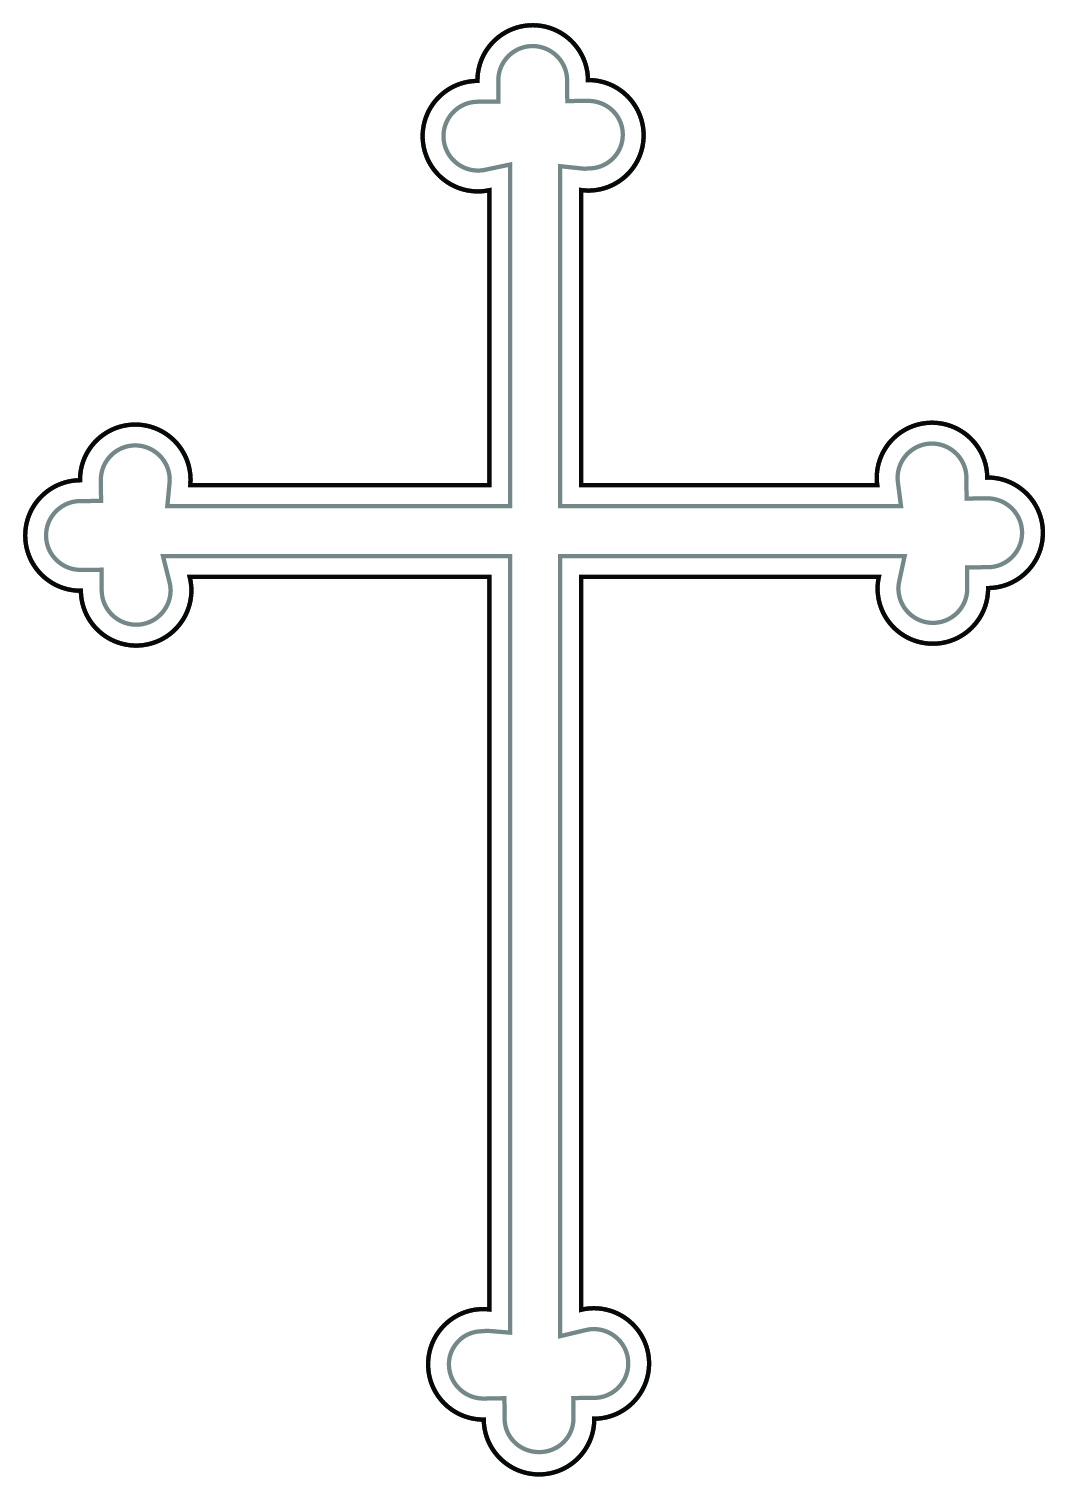 baptism clipart cross